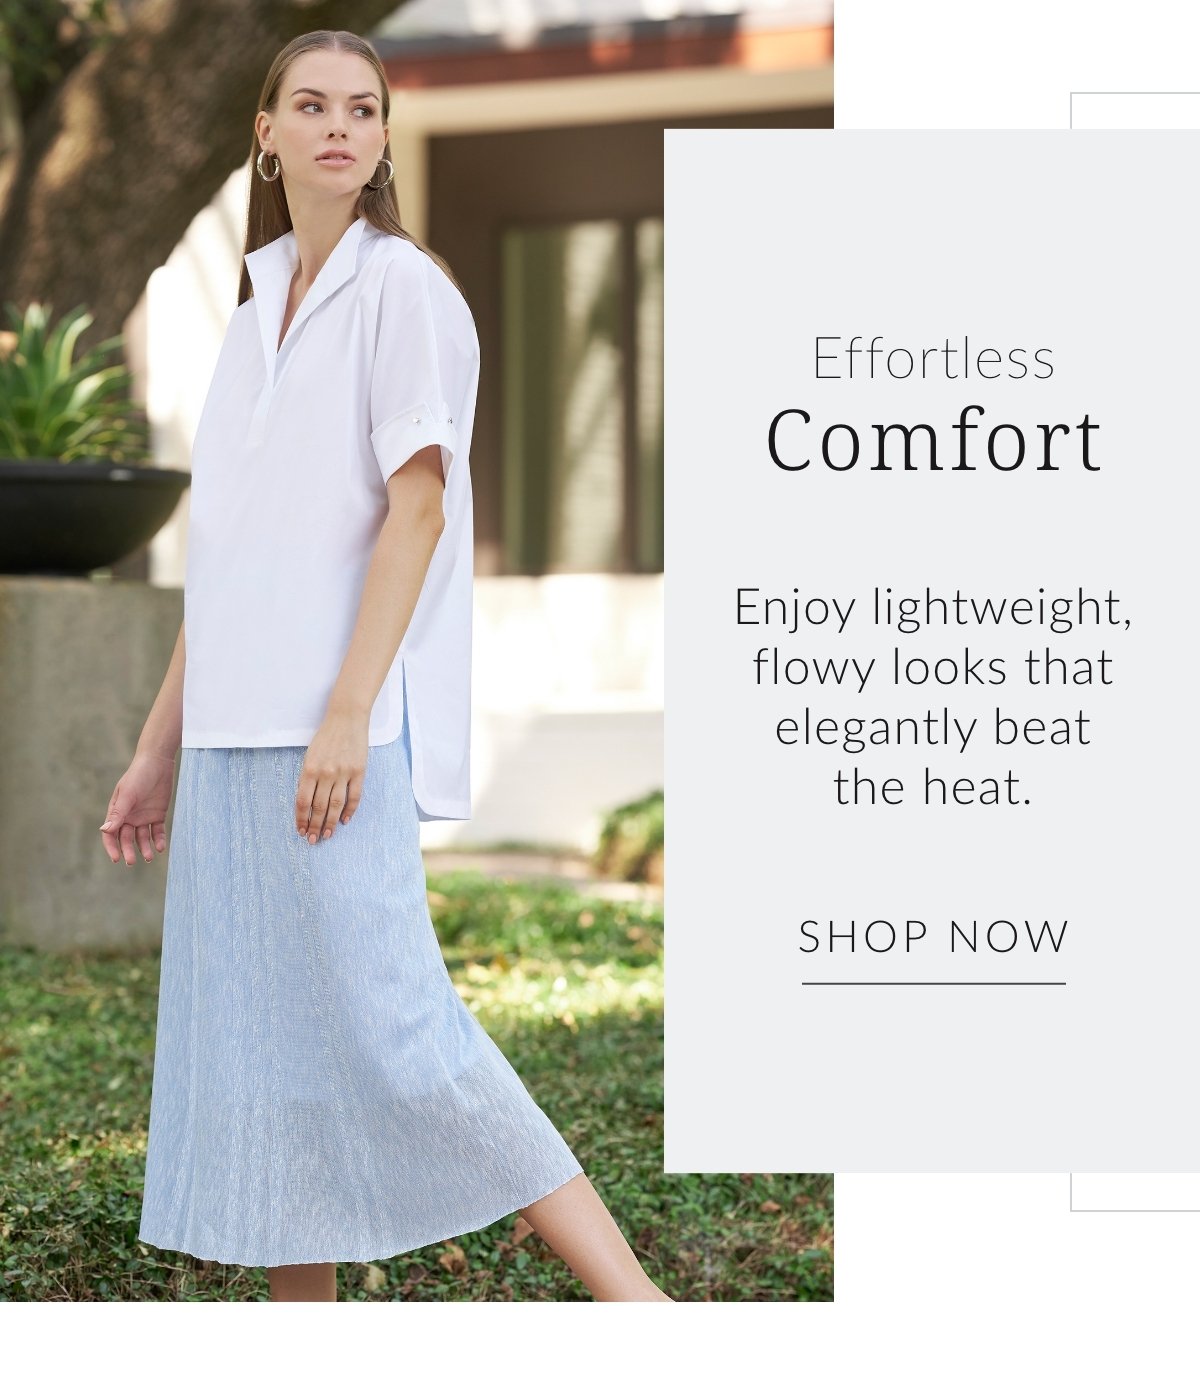 Effortless Comfort - Enjoy lightweight, flowy looks that elegantly beat the heat. Shop Now >>